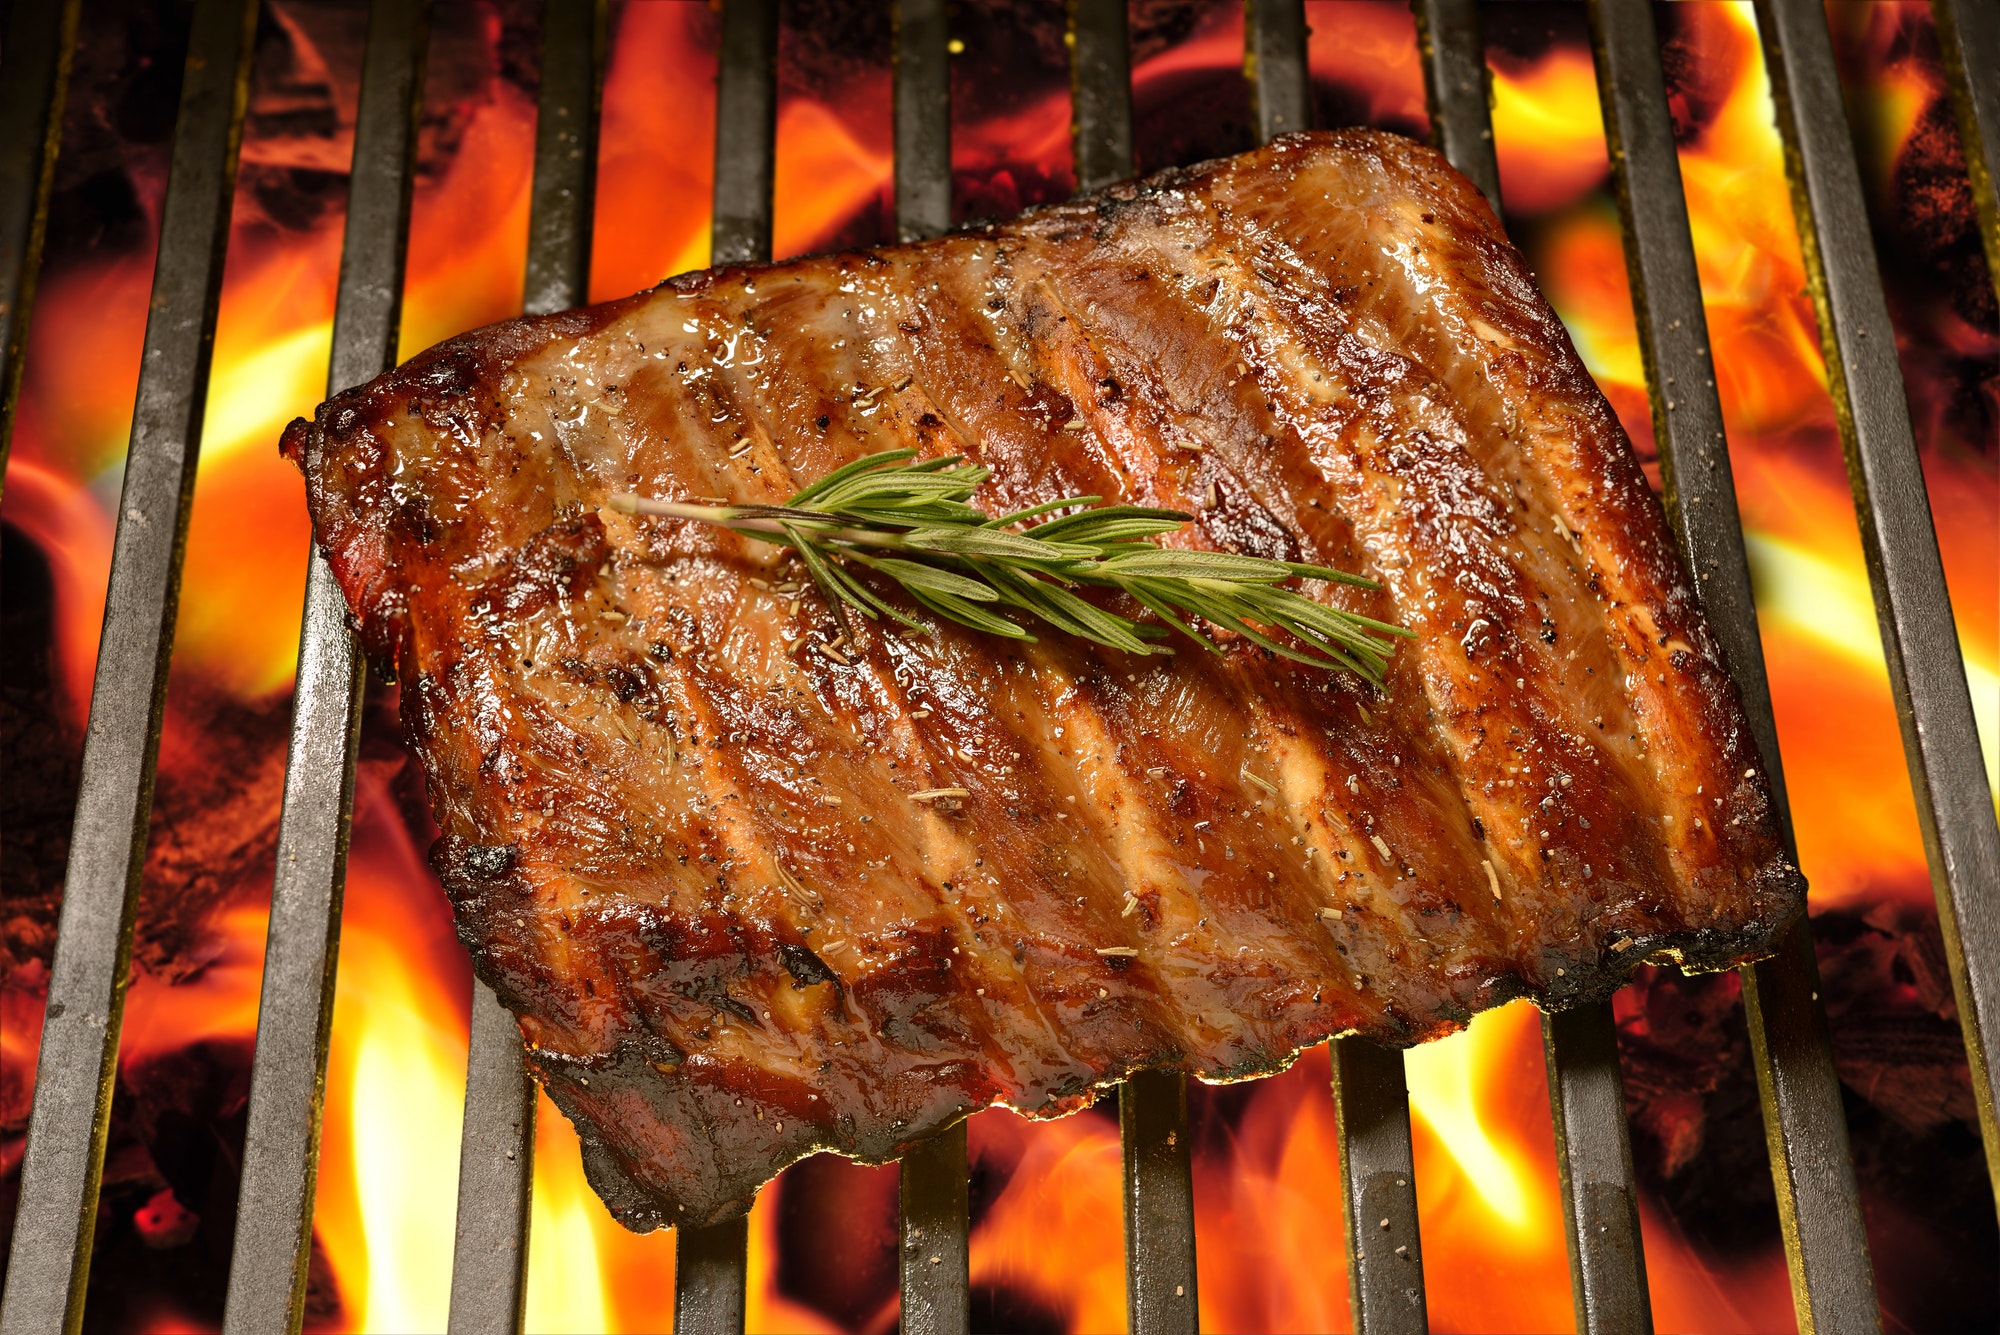 Grilled pork ribs